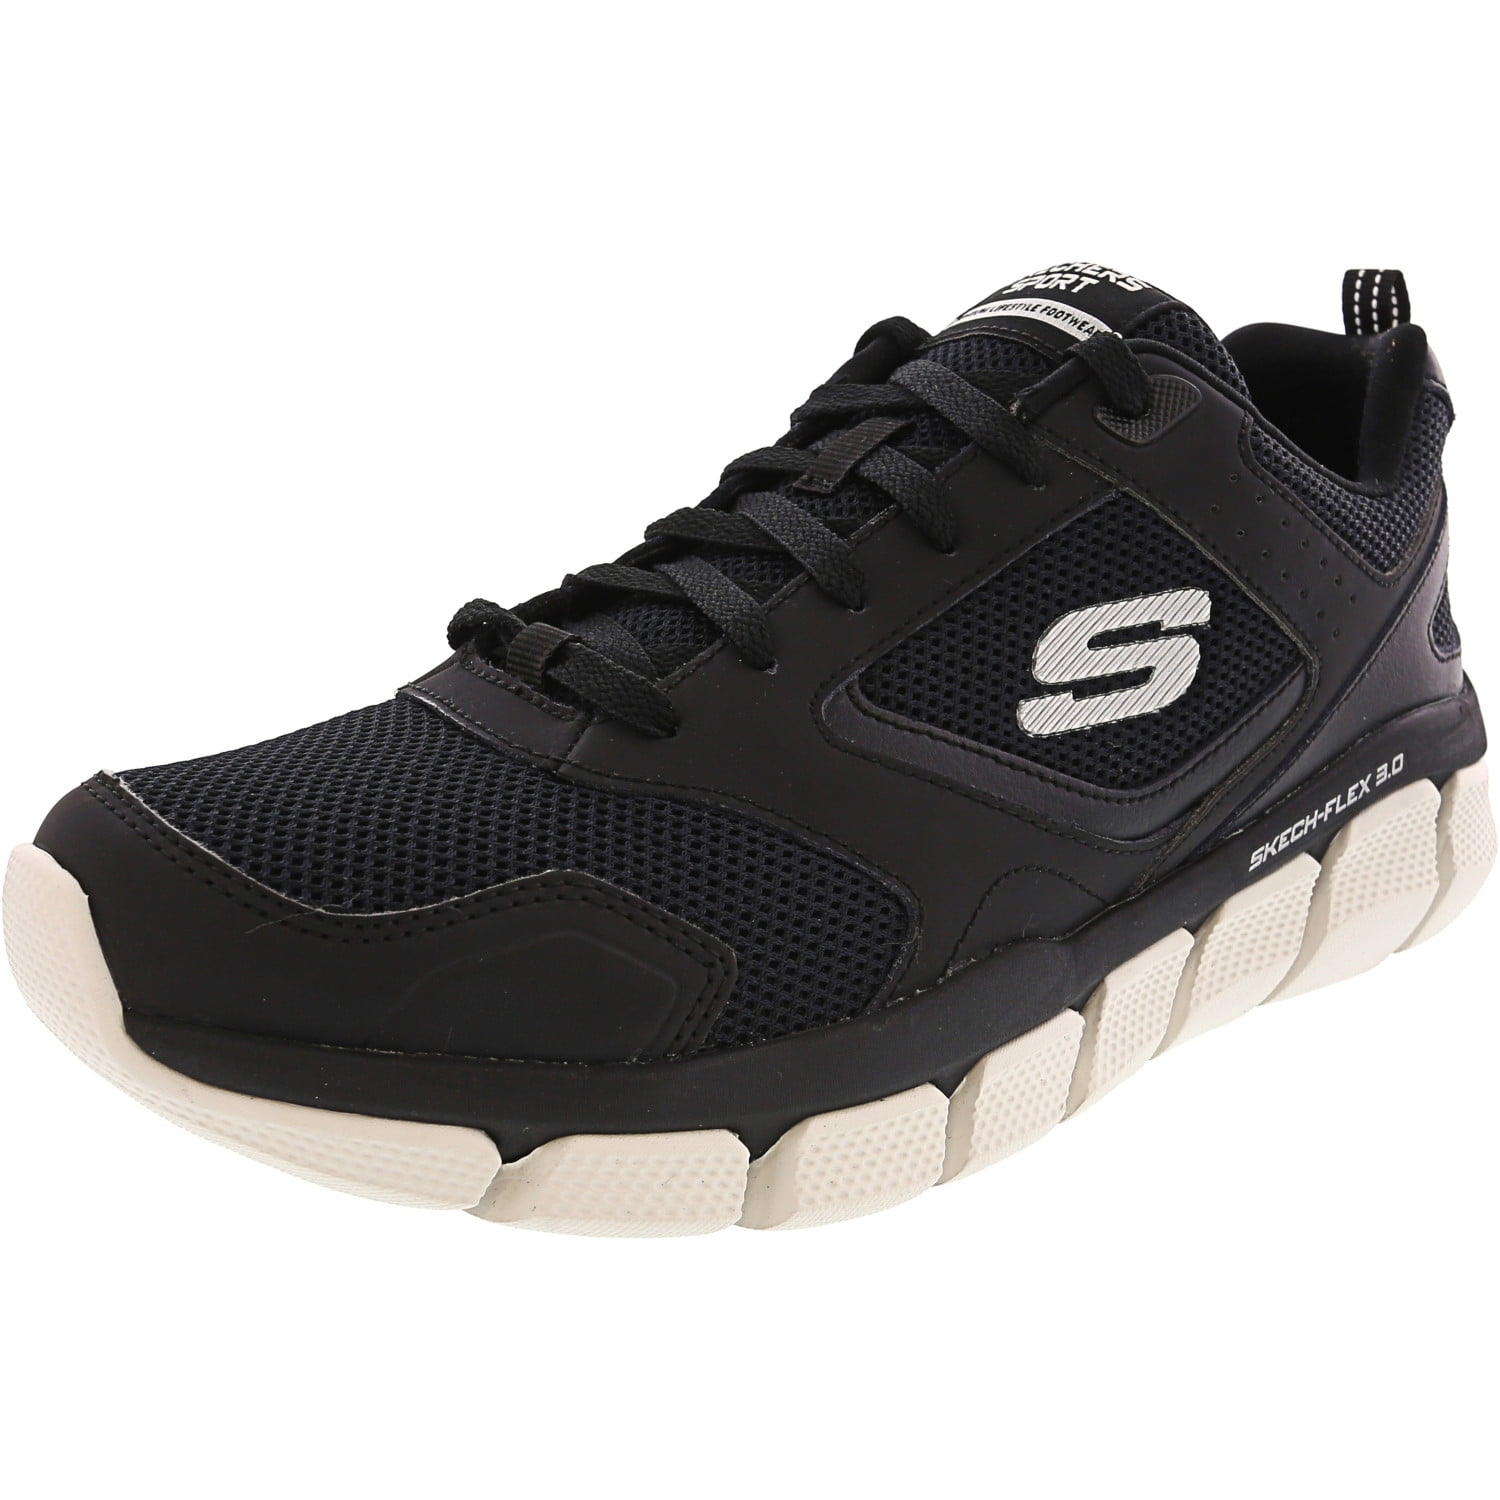 Confundir detalles suelo Skechers Men's Skech-Flex 3.0 Black / White Ankle-High Running Shoe - 9M |  Walmart Canada